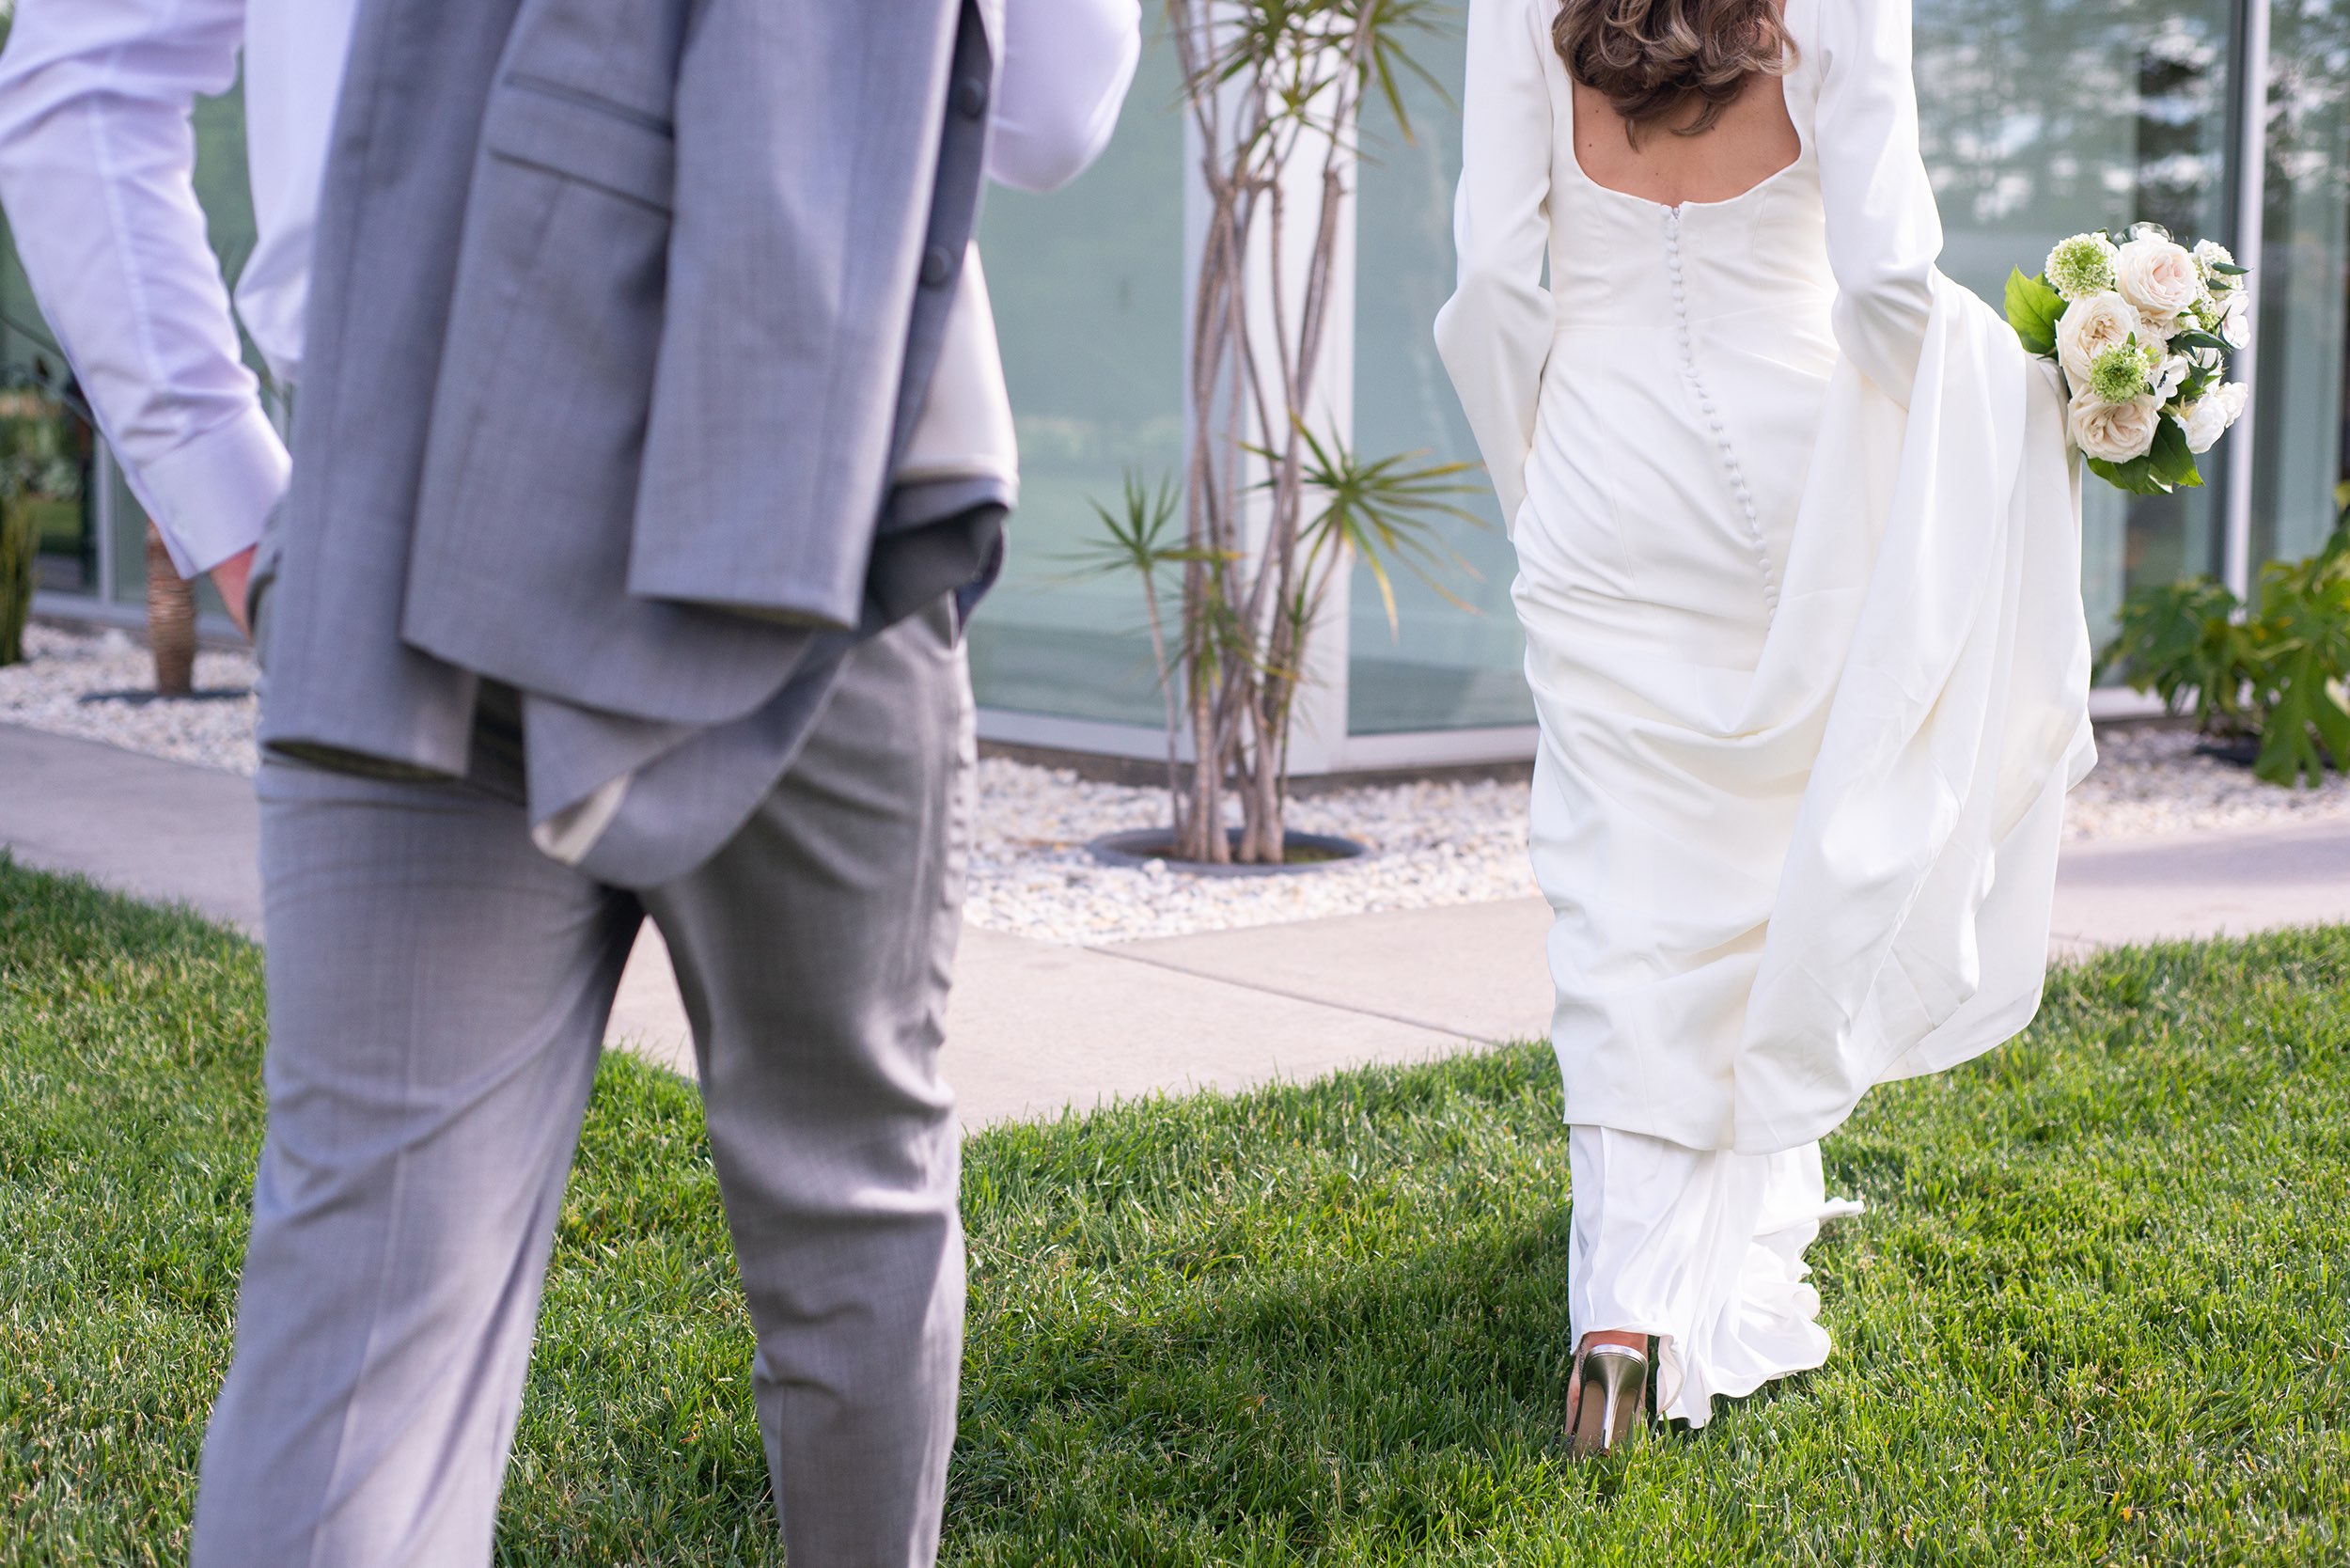 Bride and groom walking to wedding venue near Springfield, Missouri.